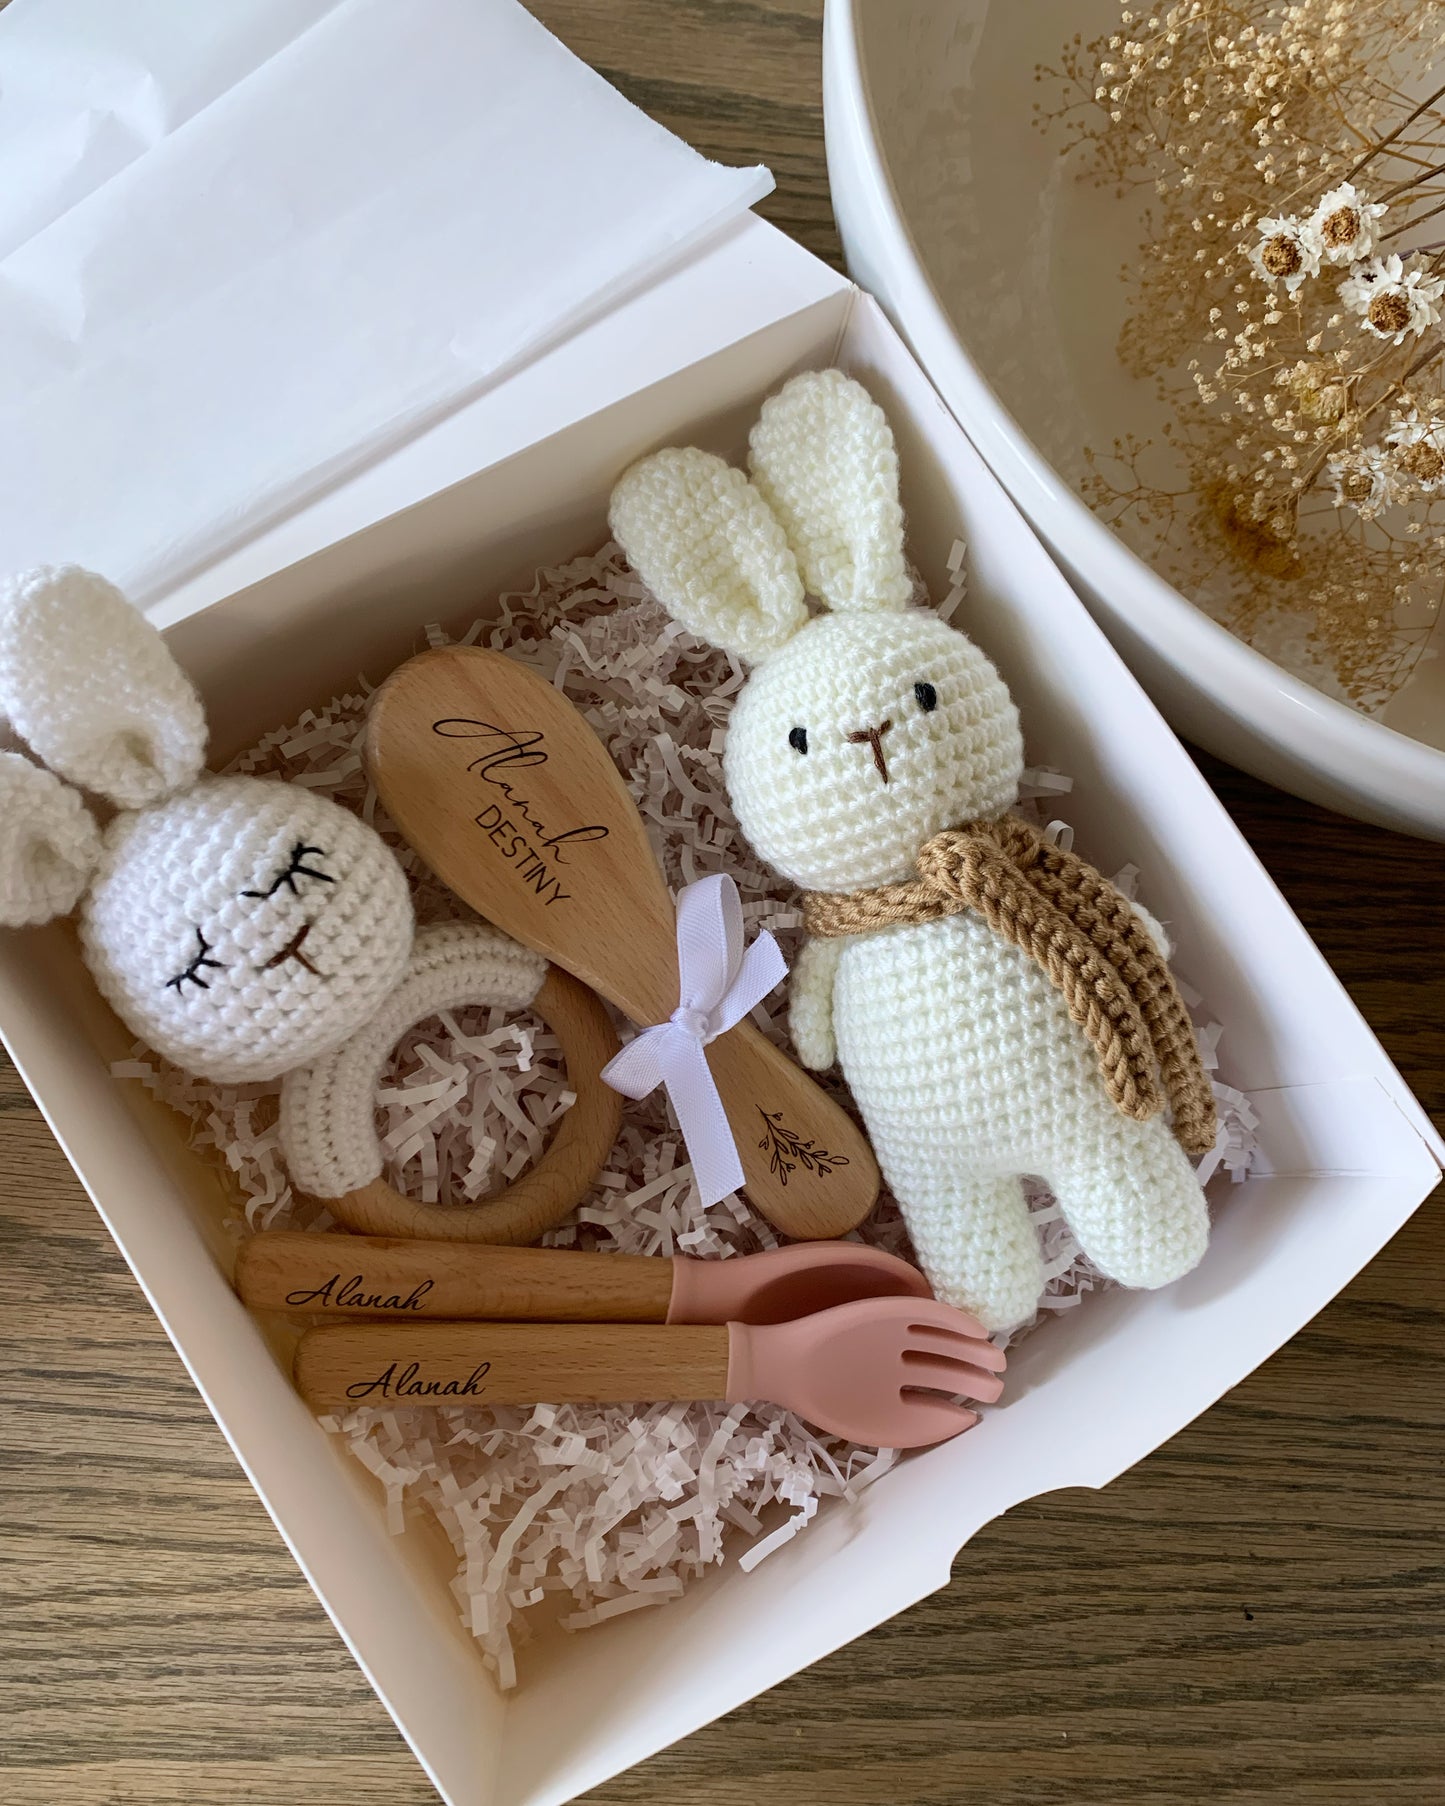 Crochet Toy Bunny